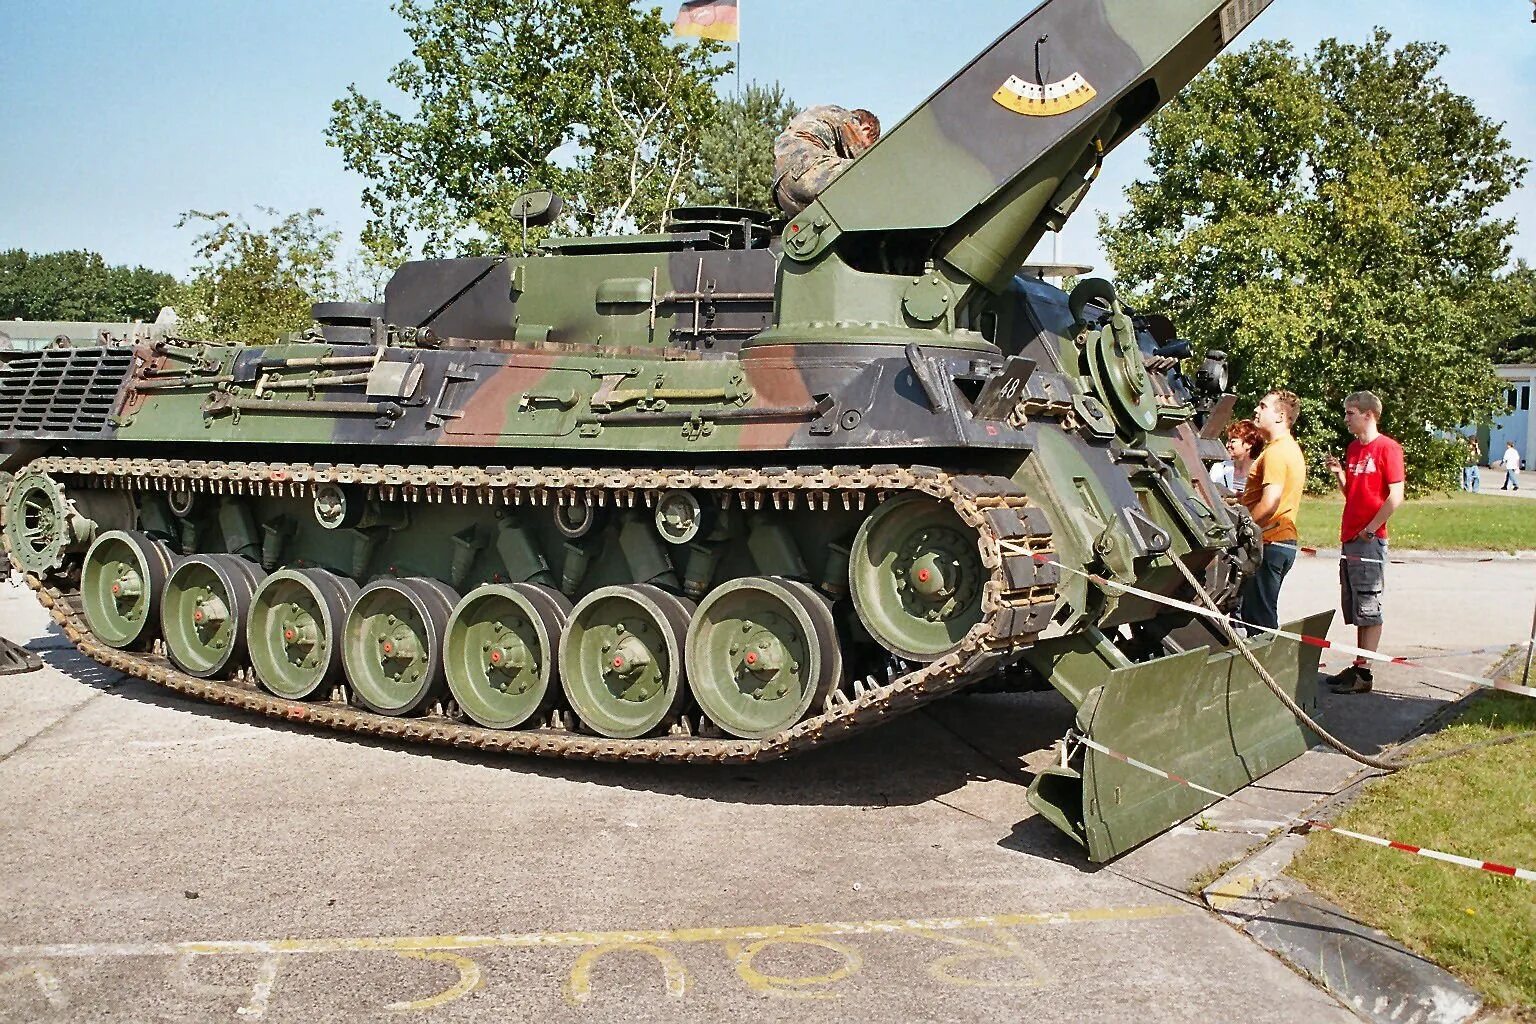 Bergepanzer 2a2. Брэм Бергепанцер-2. Брэм Bergepanzer 3. 2135 Брэм Bergepanzer 2a2. Ремонтно эвакуационная машина